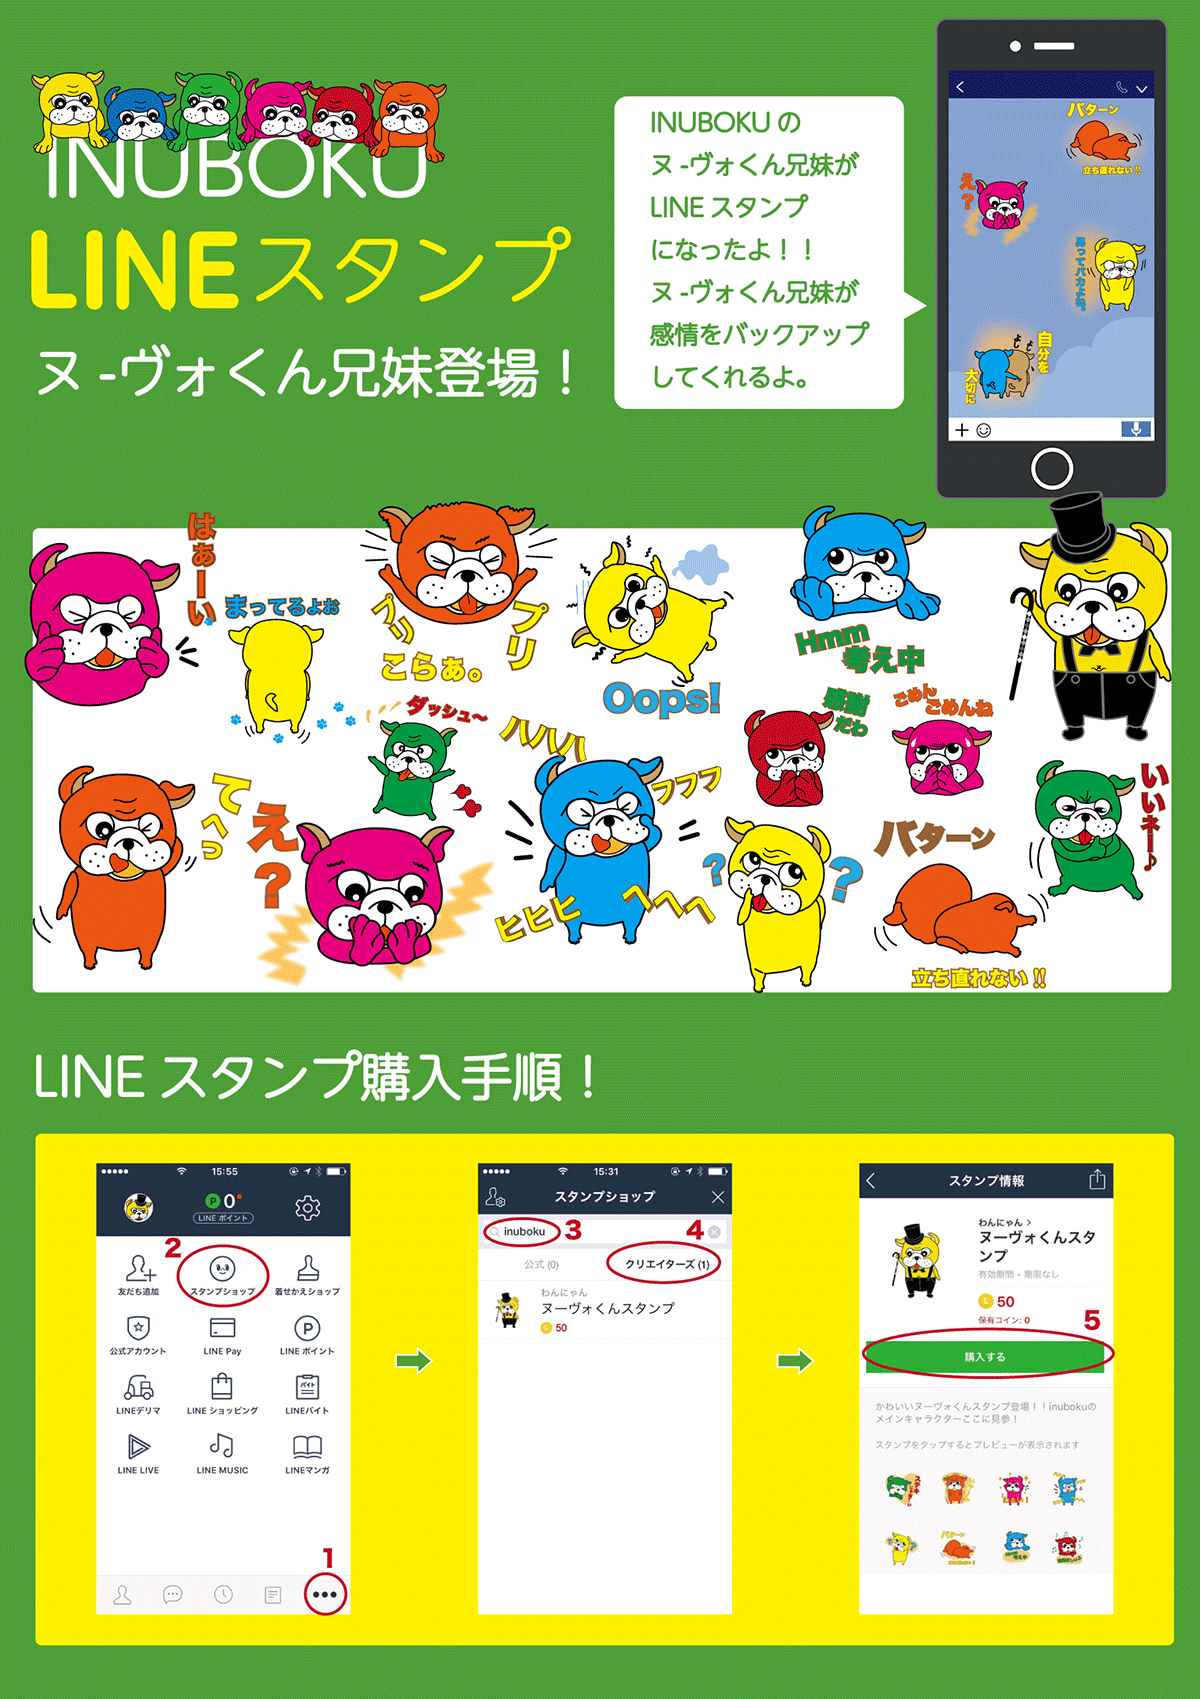 inuboku LINE スタンプ販売中